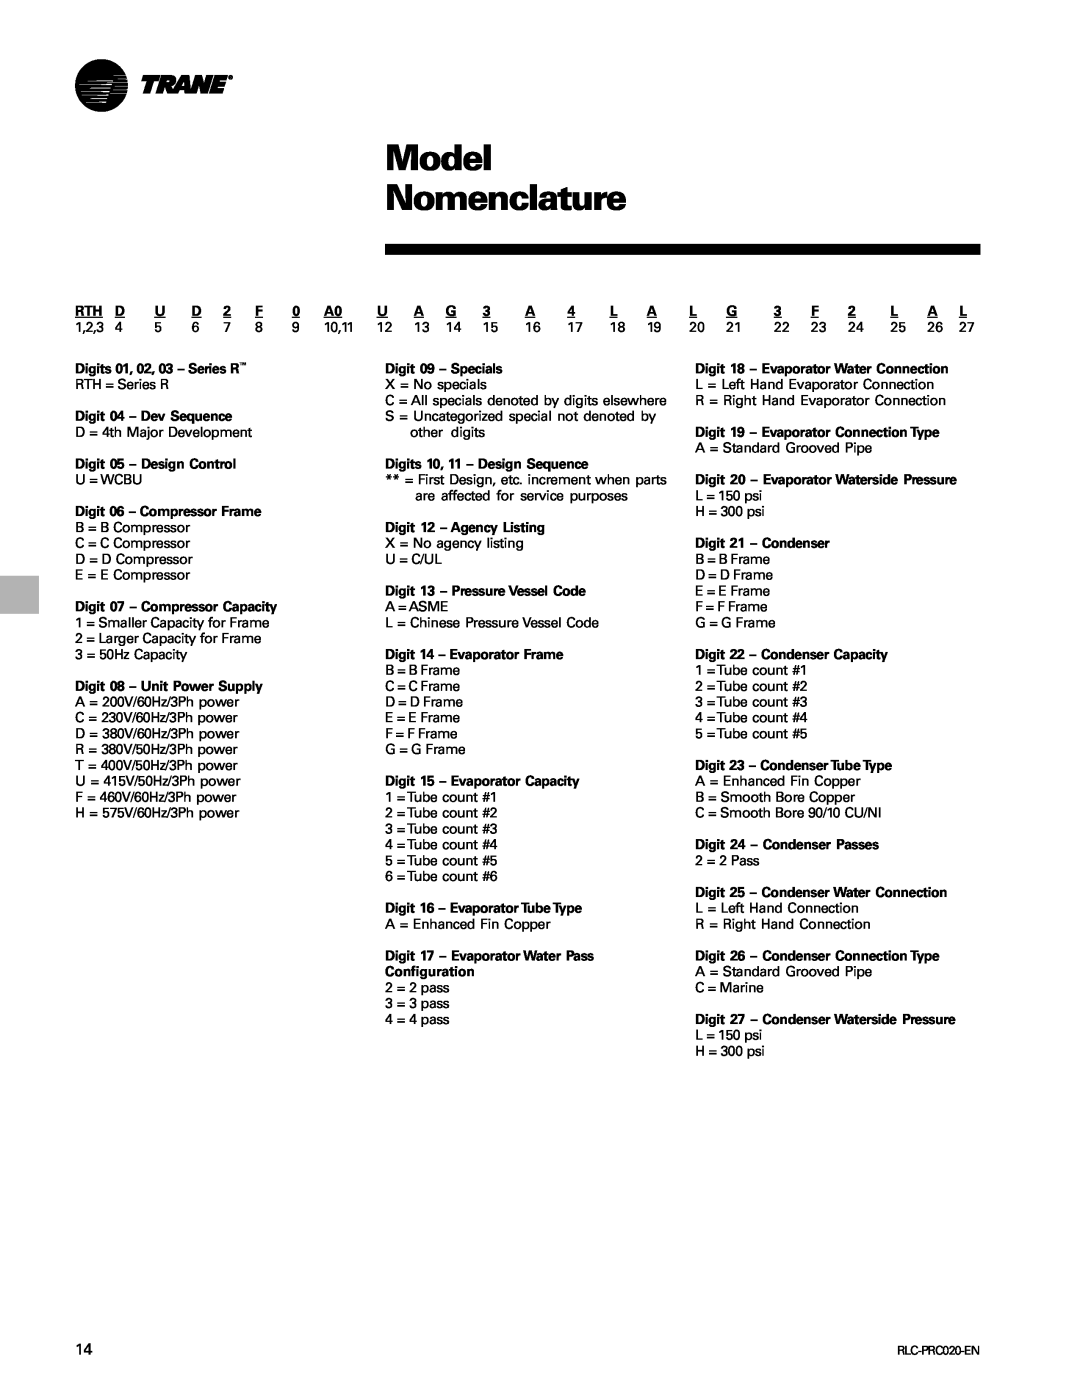 Trane RTHD manual Model Nomenclature 